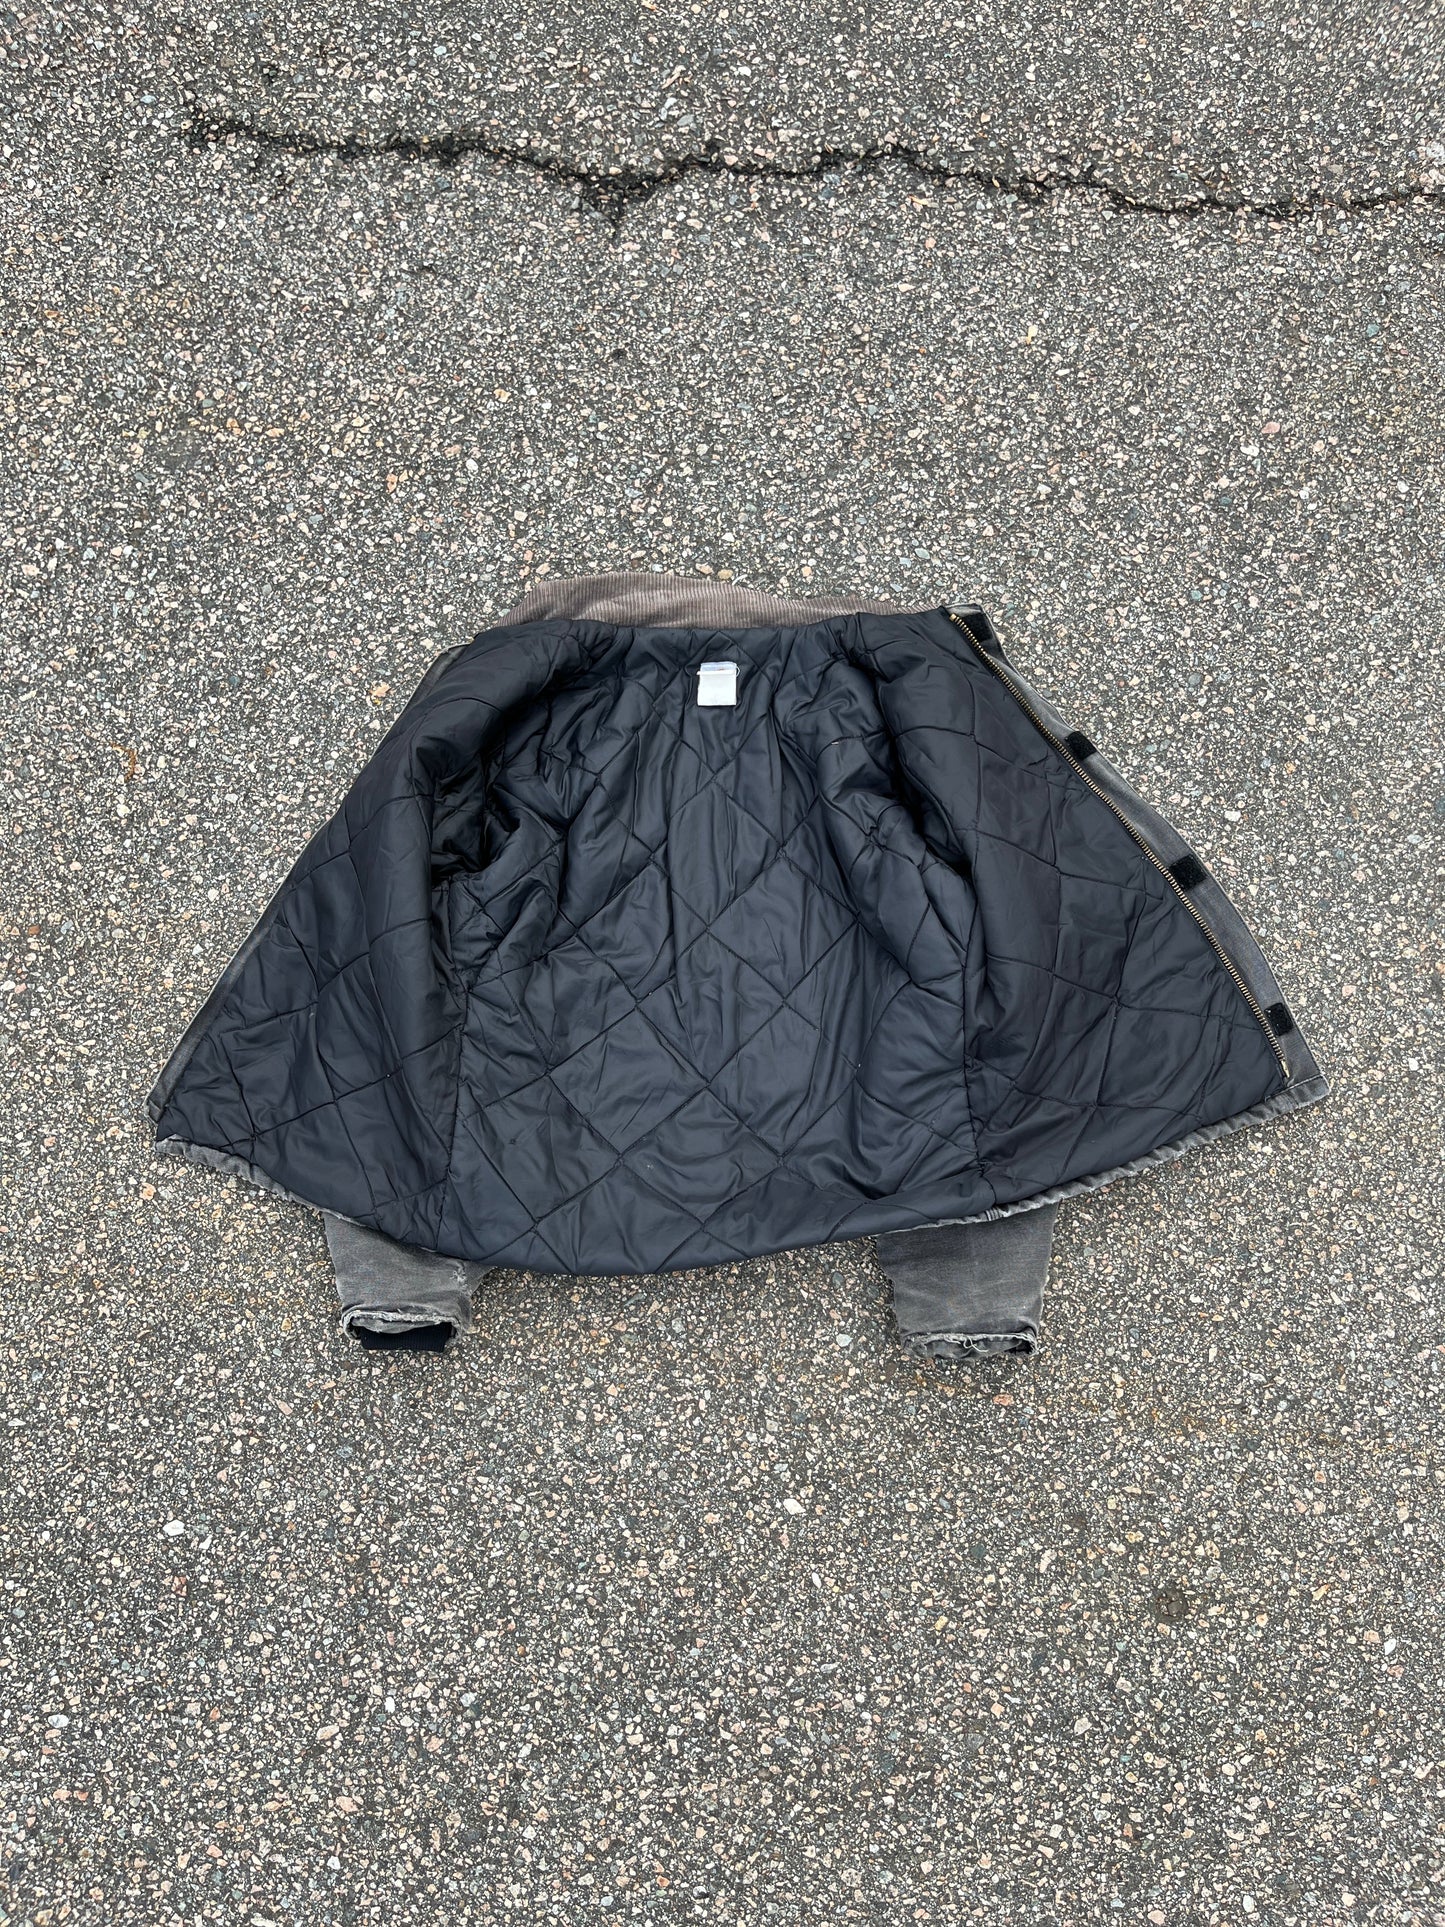 Faded Black Carhartt Arctic Jacket - Medium